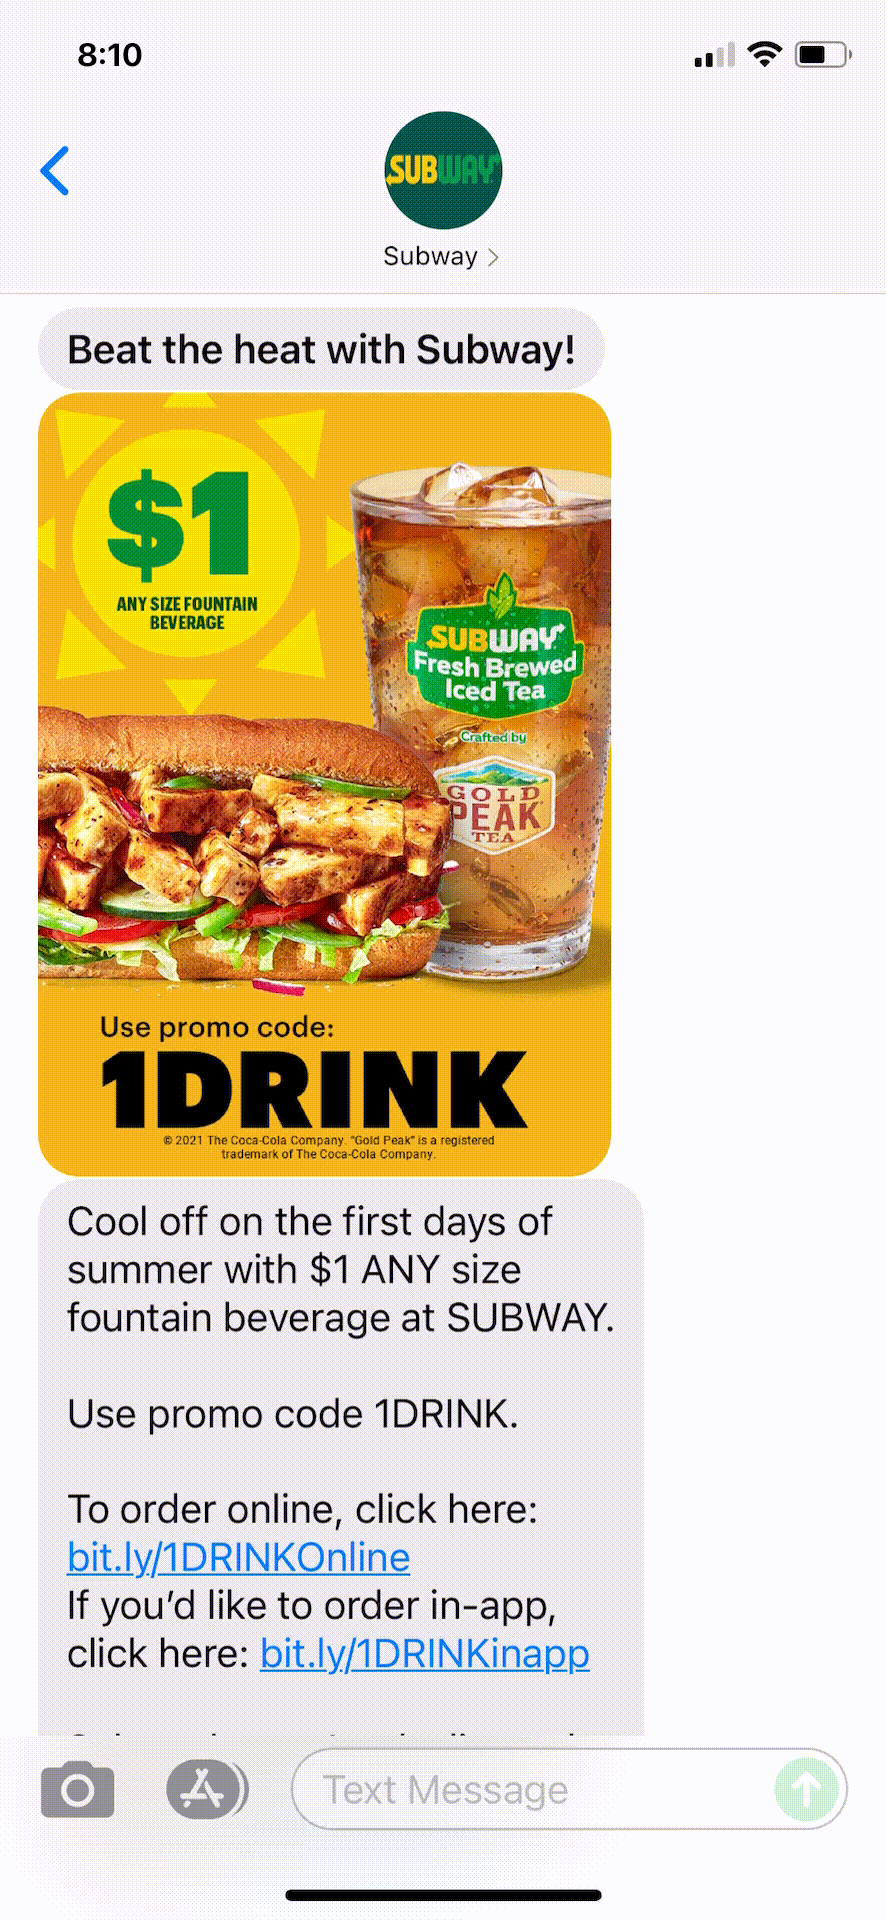 Subway-Text-Message-Marketing-Example-06.24.2021